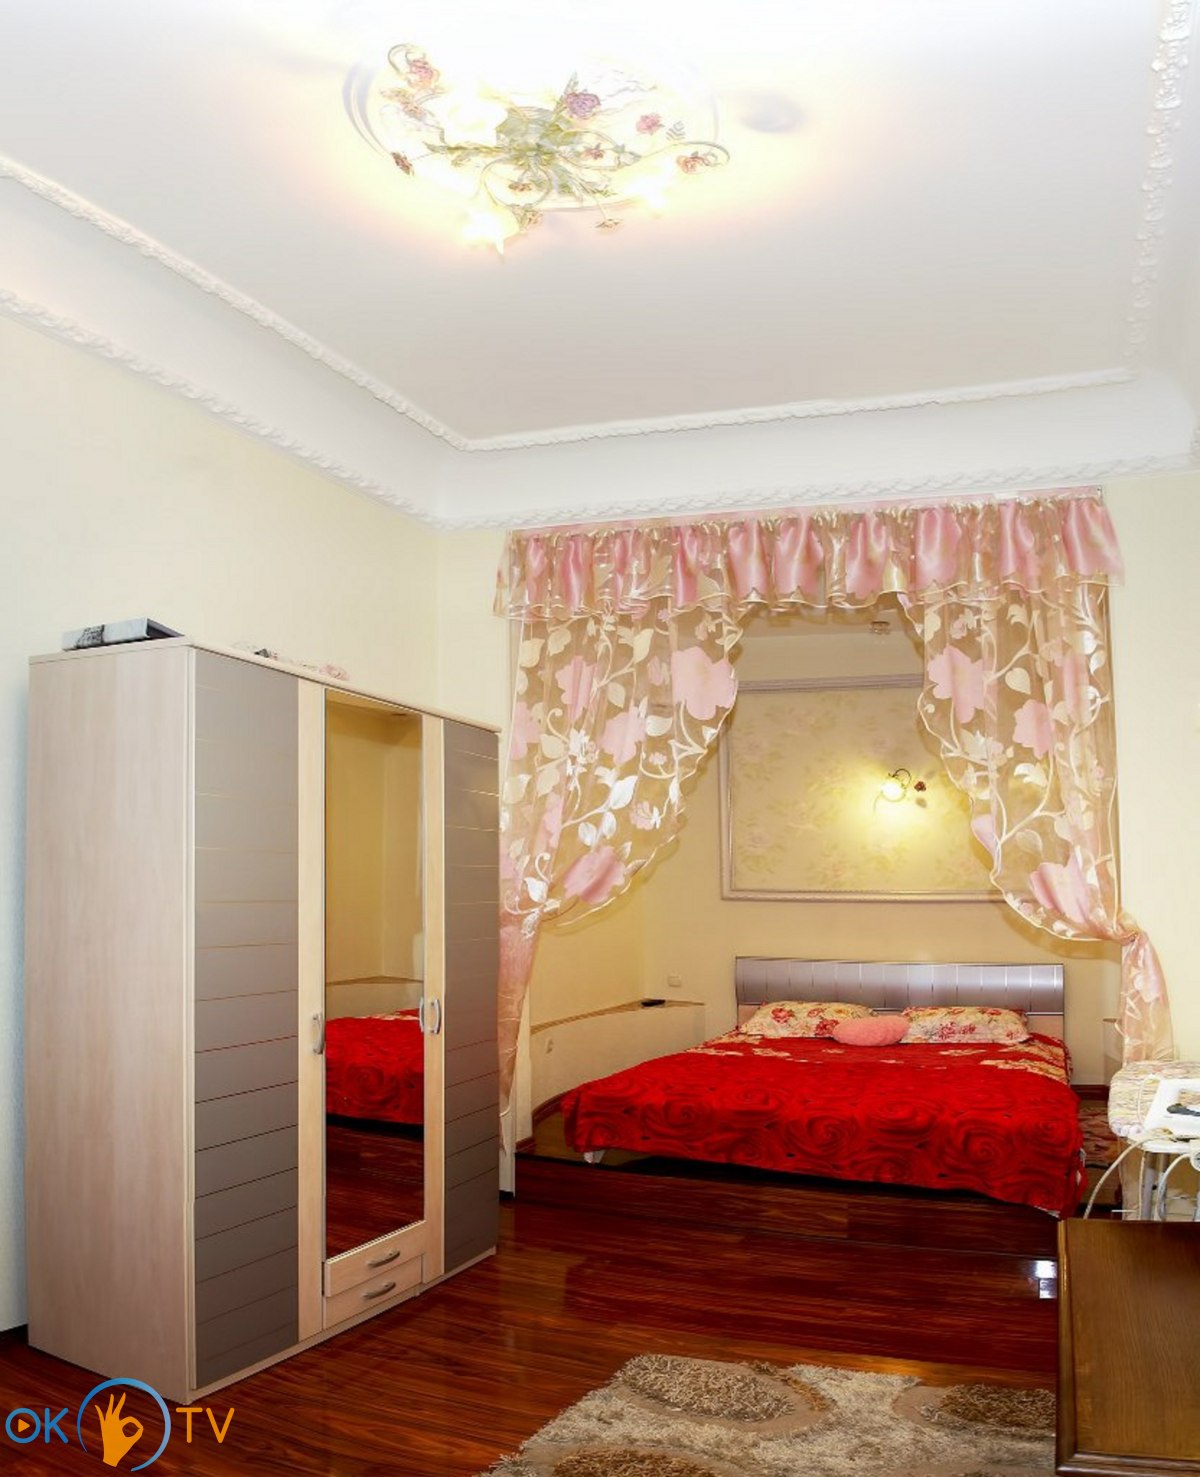 Трехкомнатная квартира в центре Одессы VIP-класса фото 5